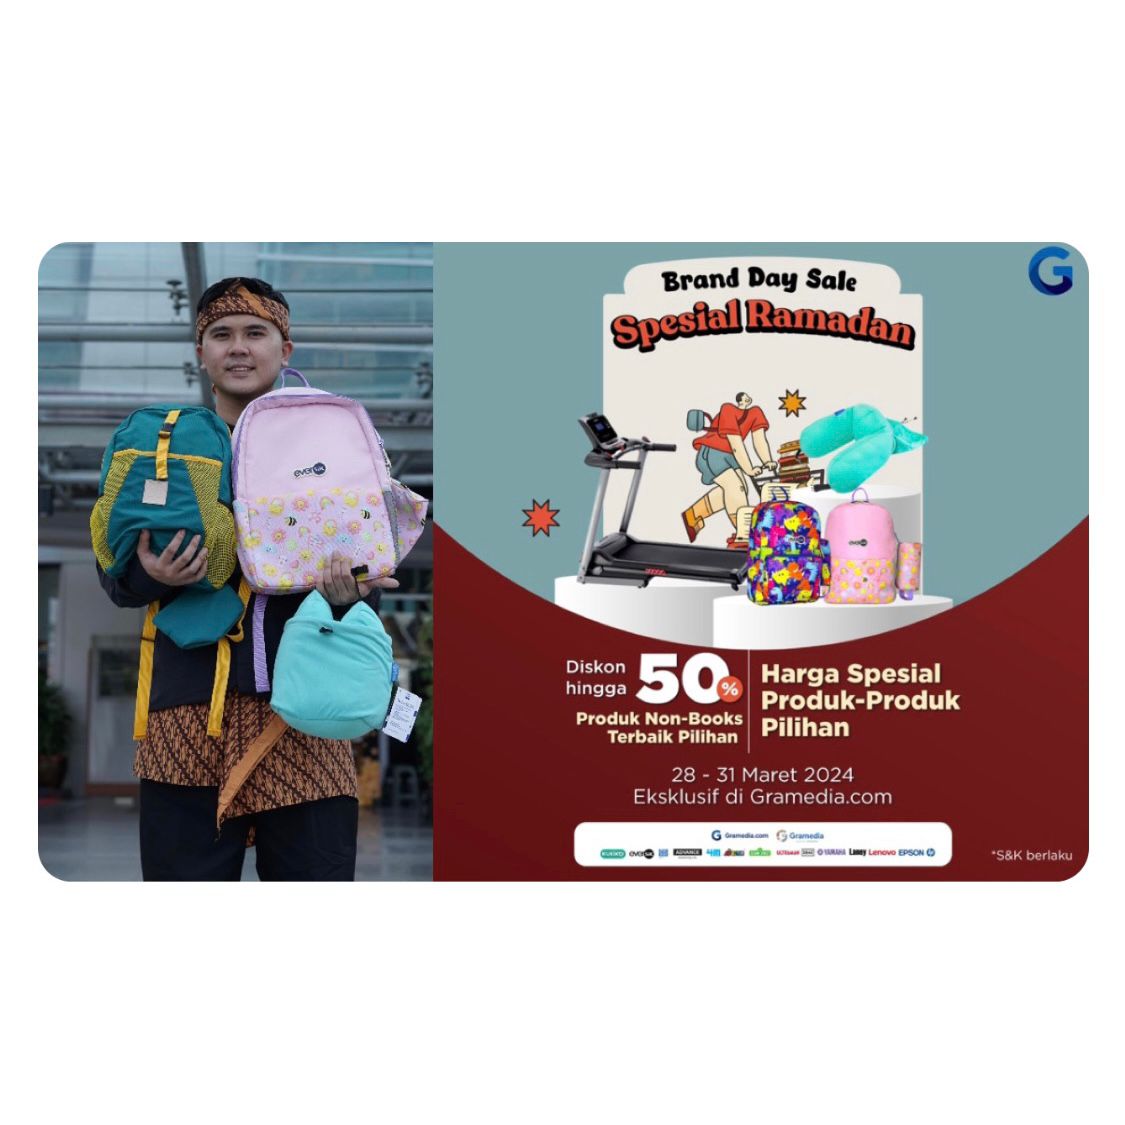 Brand Day Sale Ramadan: Tas Keren dari Eversac Kinder Diskon Gila-gilaan!